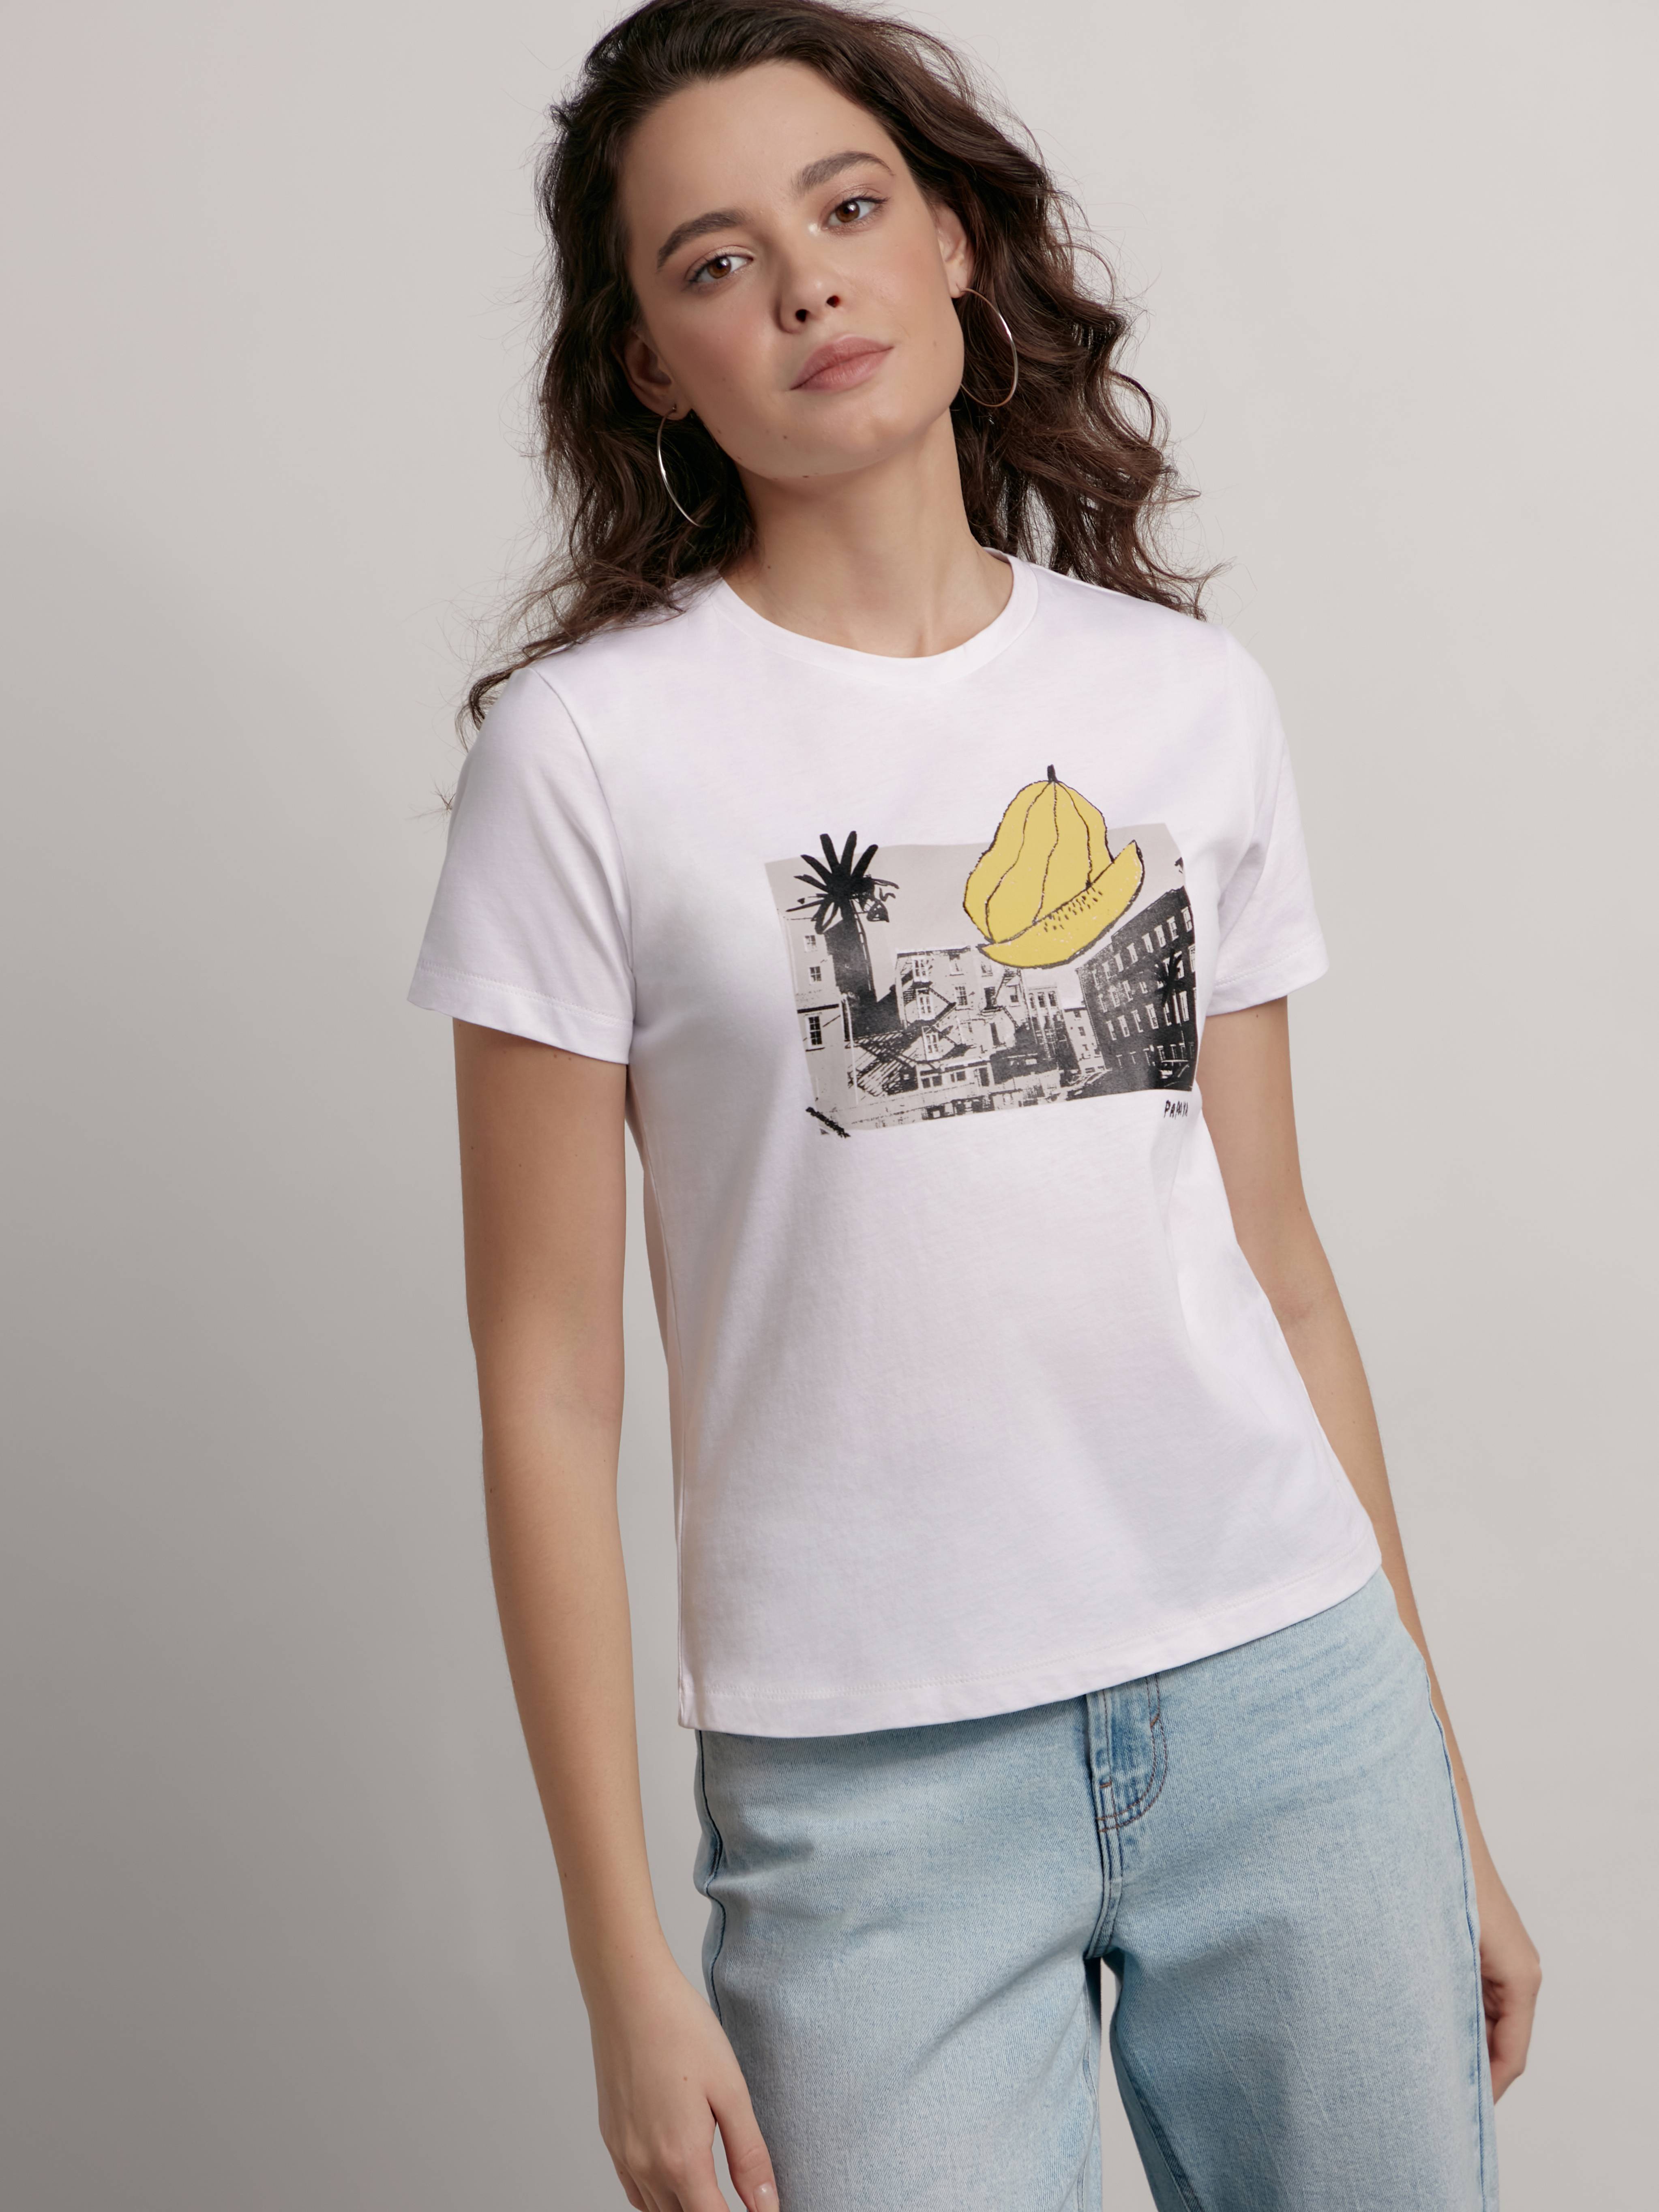 Базовая футболка из хлопка с рисунком «Papaya» LD 2131 Conte ⭐️, цвет white, размер 170-100/xl